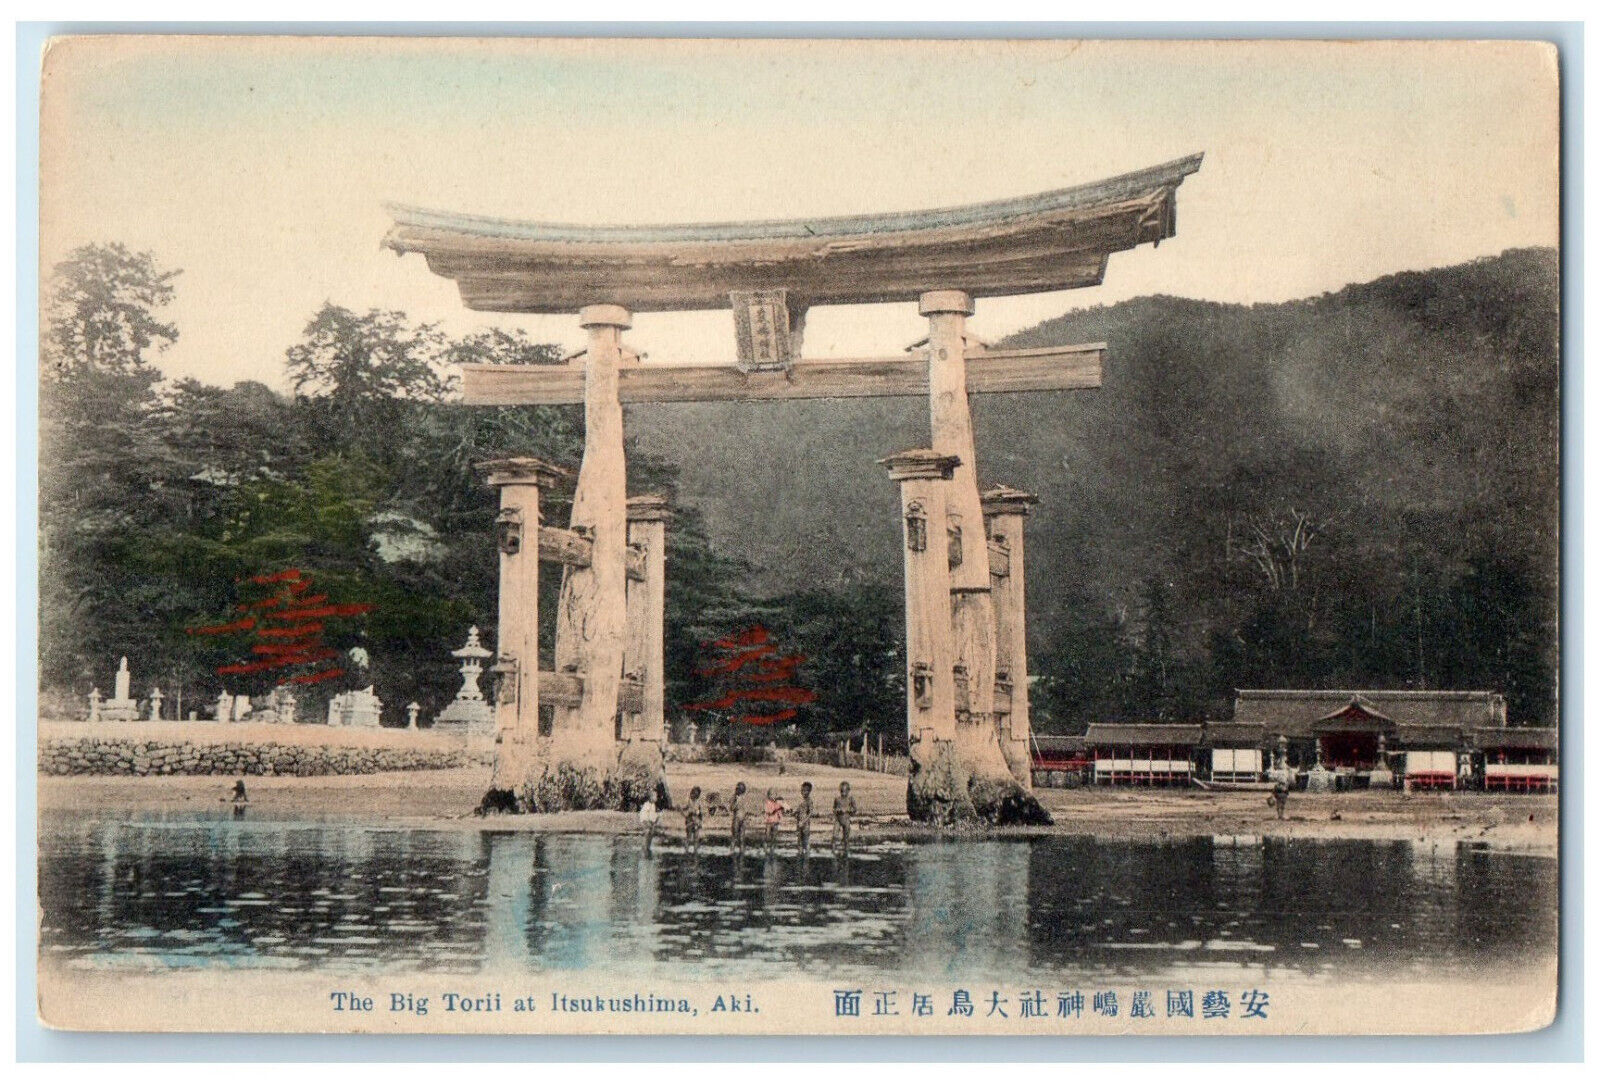 c1910 The Big Torii at Itsukushima Aki Japan Antique Unposted Postcard